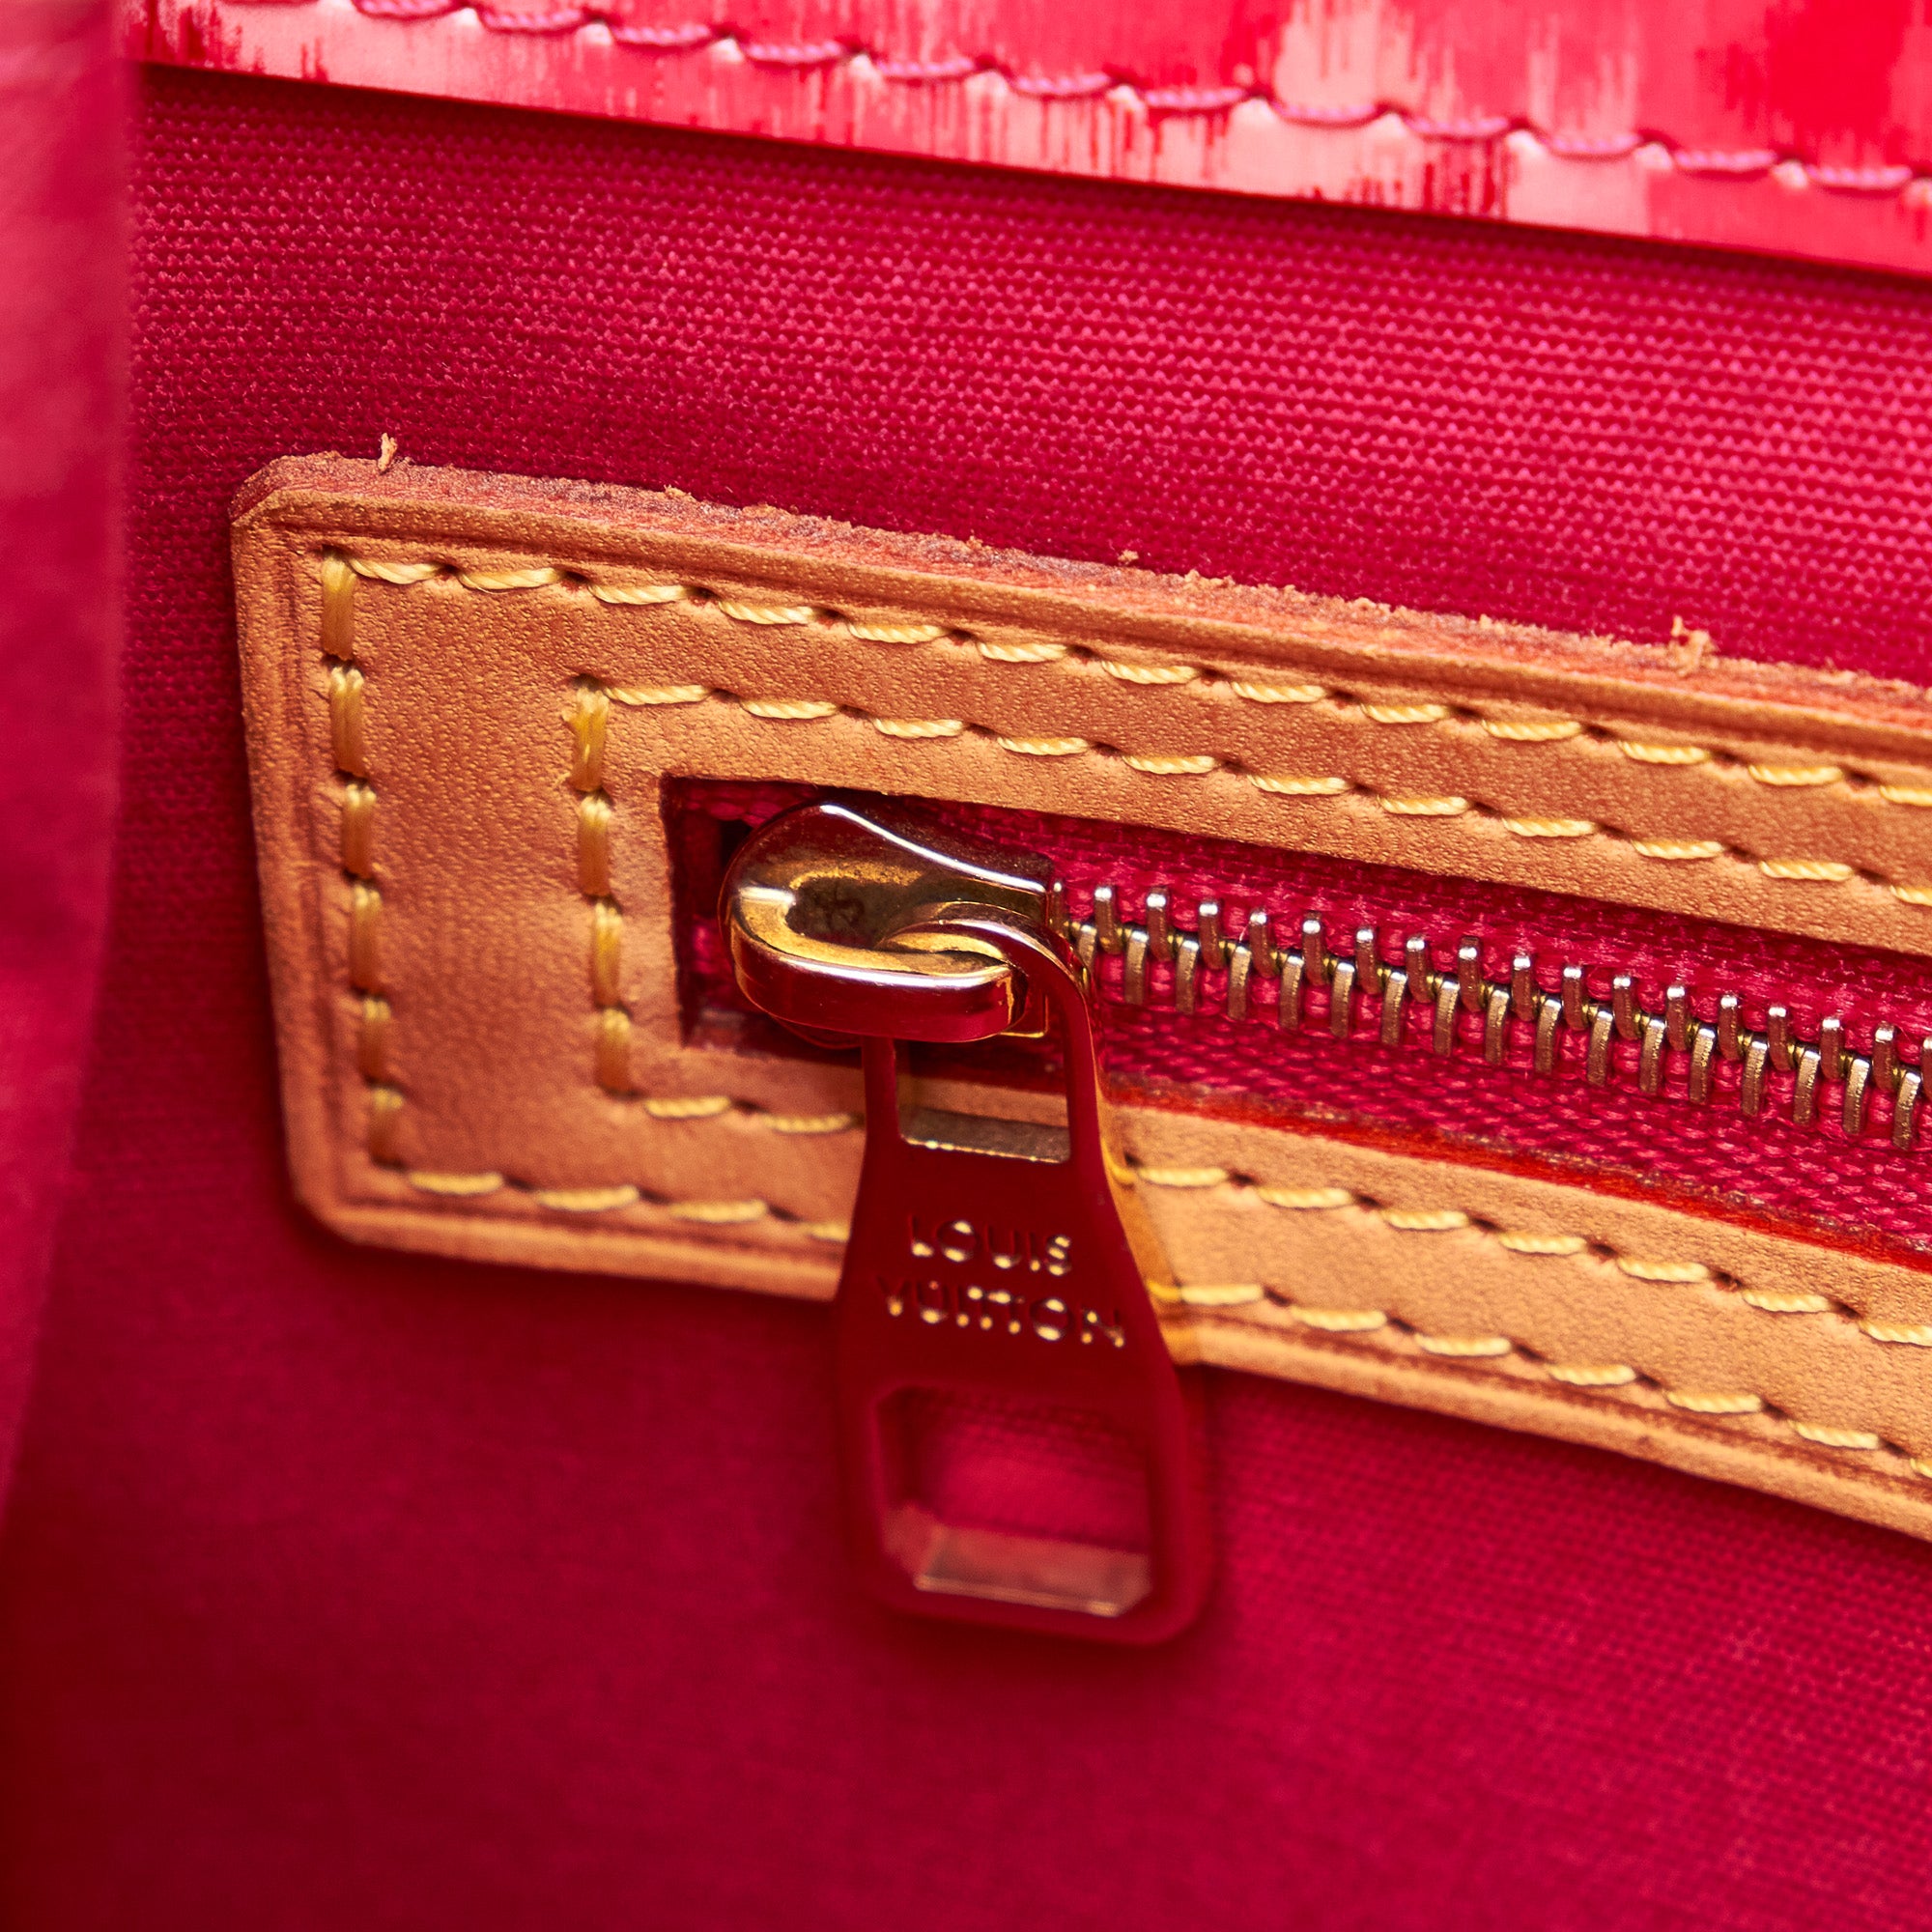 Louis Vuitton Monogram Vernis Ikat Catalina Handbag